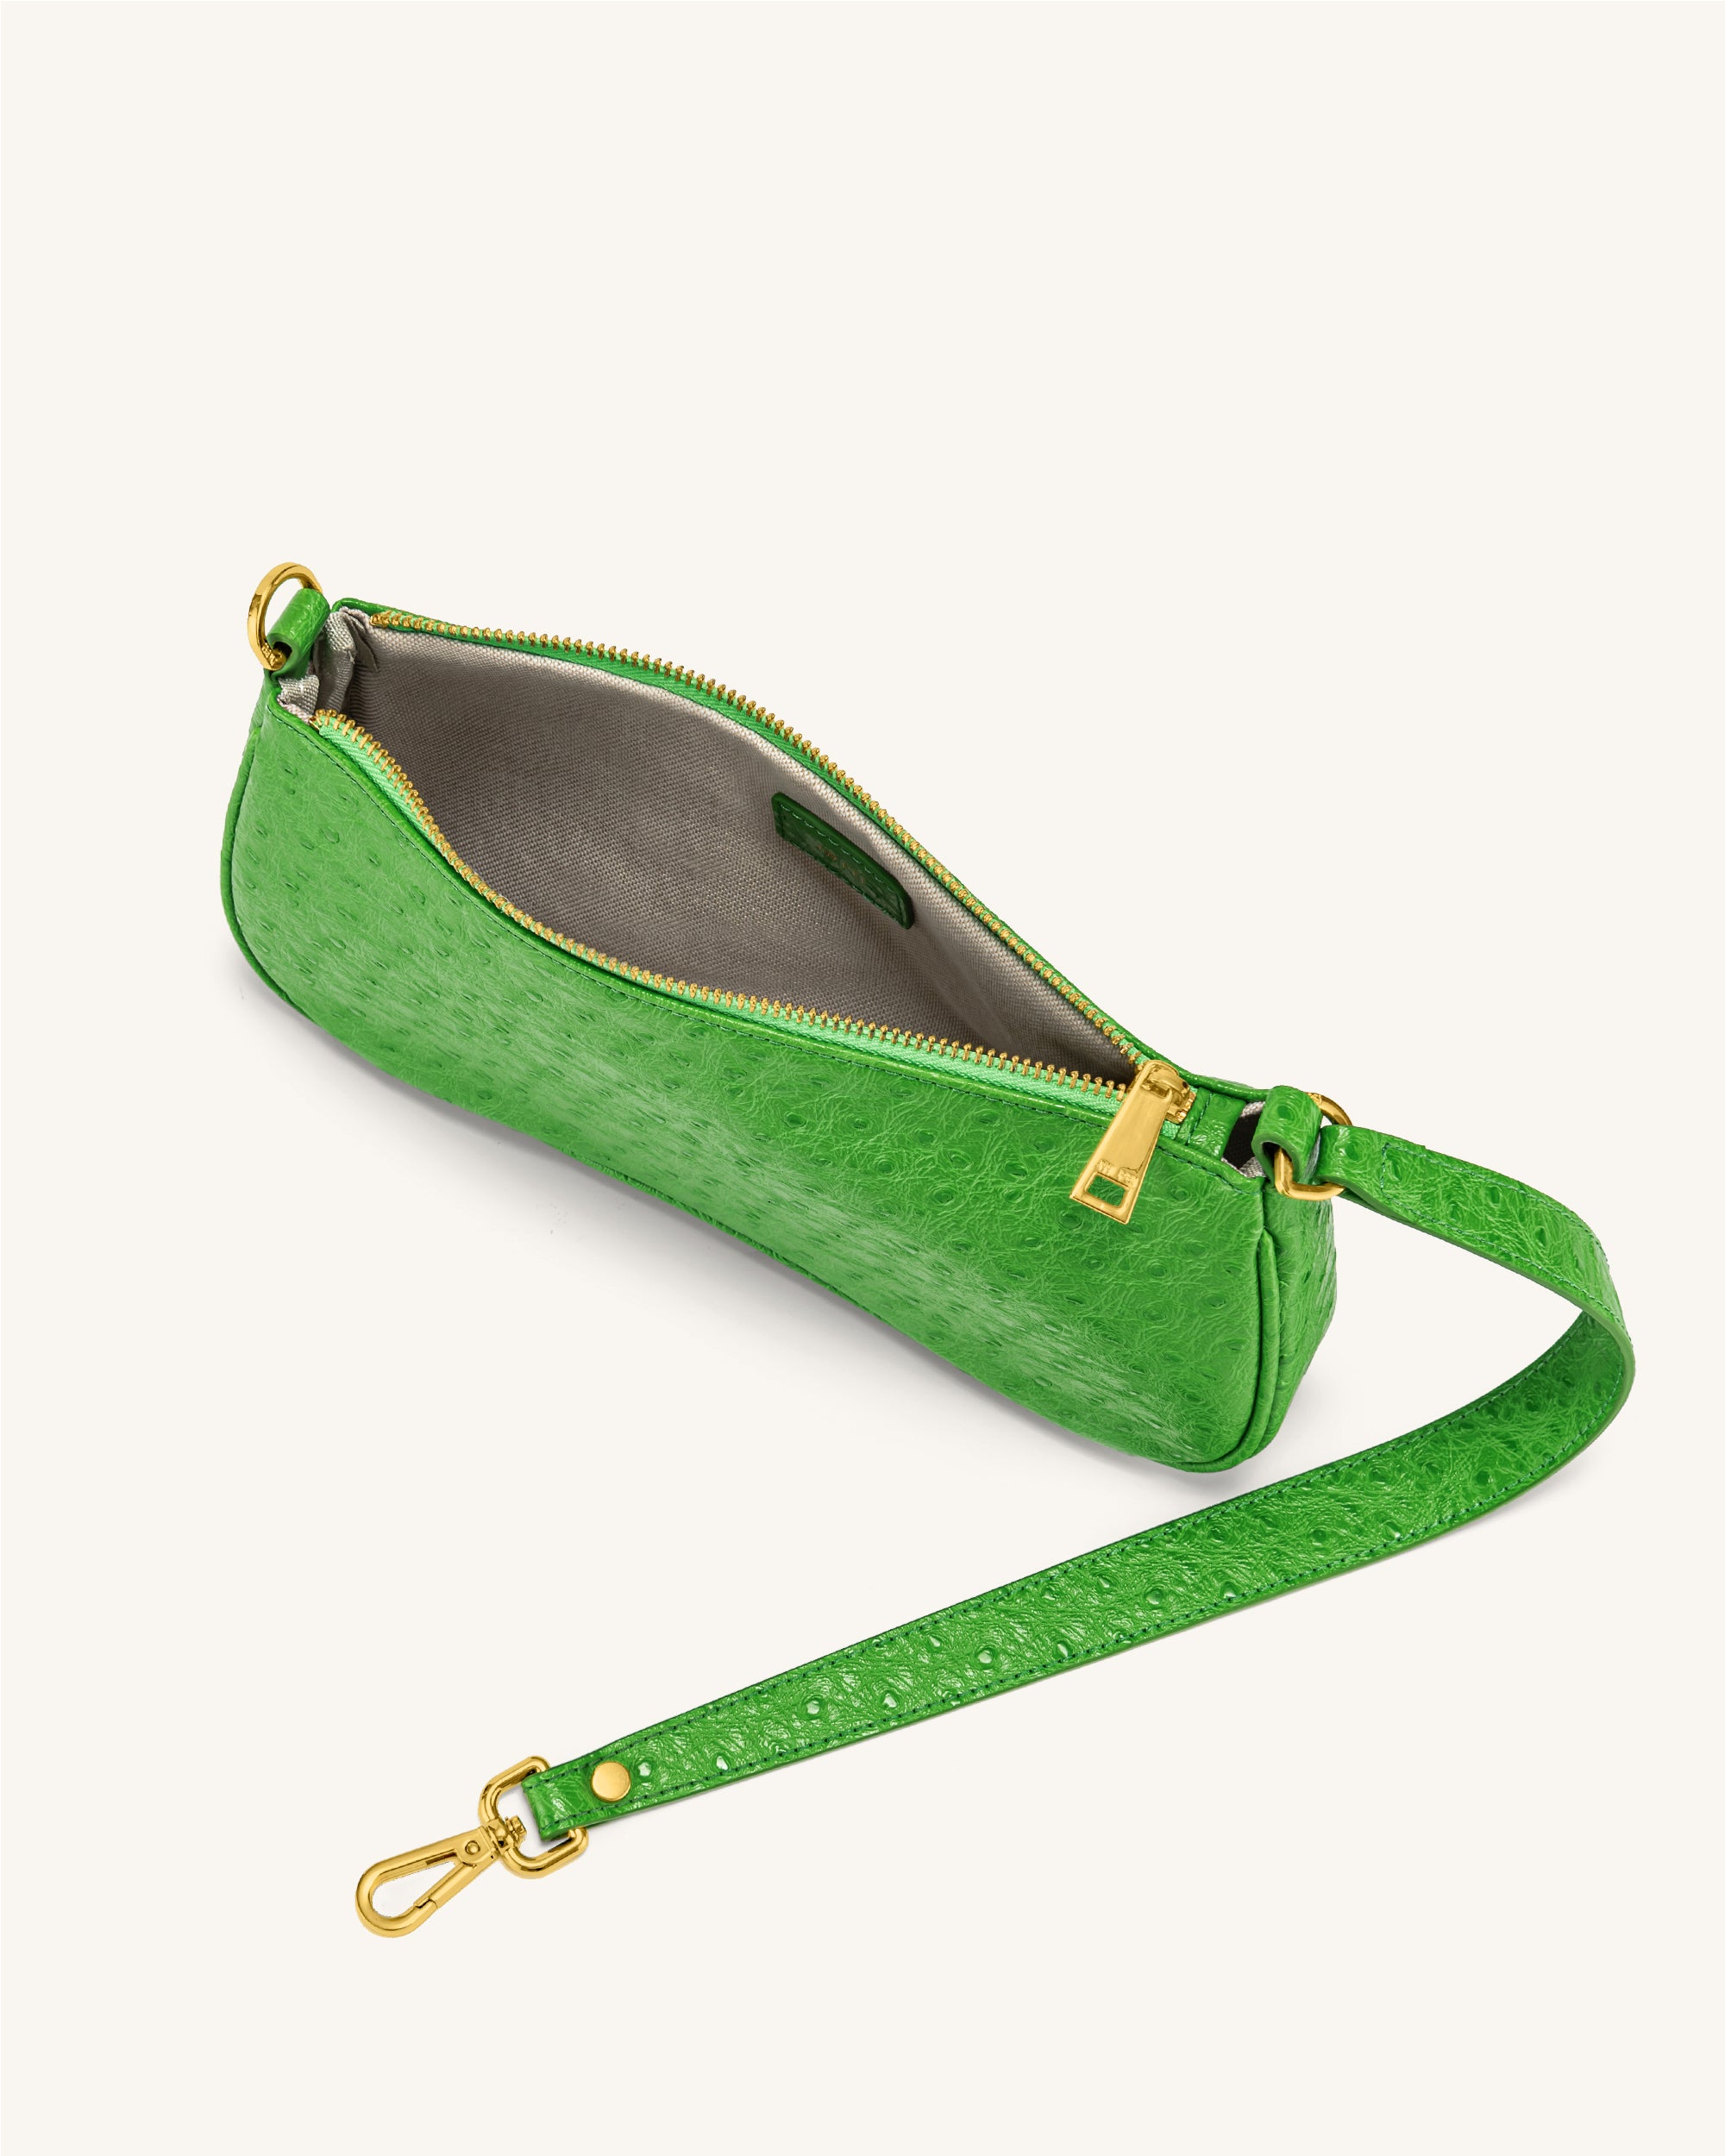 Eva Shoulder Bag - Dark Green Croc - Fashion Women Vegan Bag Online Shopping - JW Pei